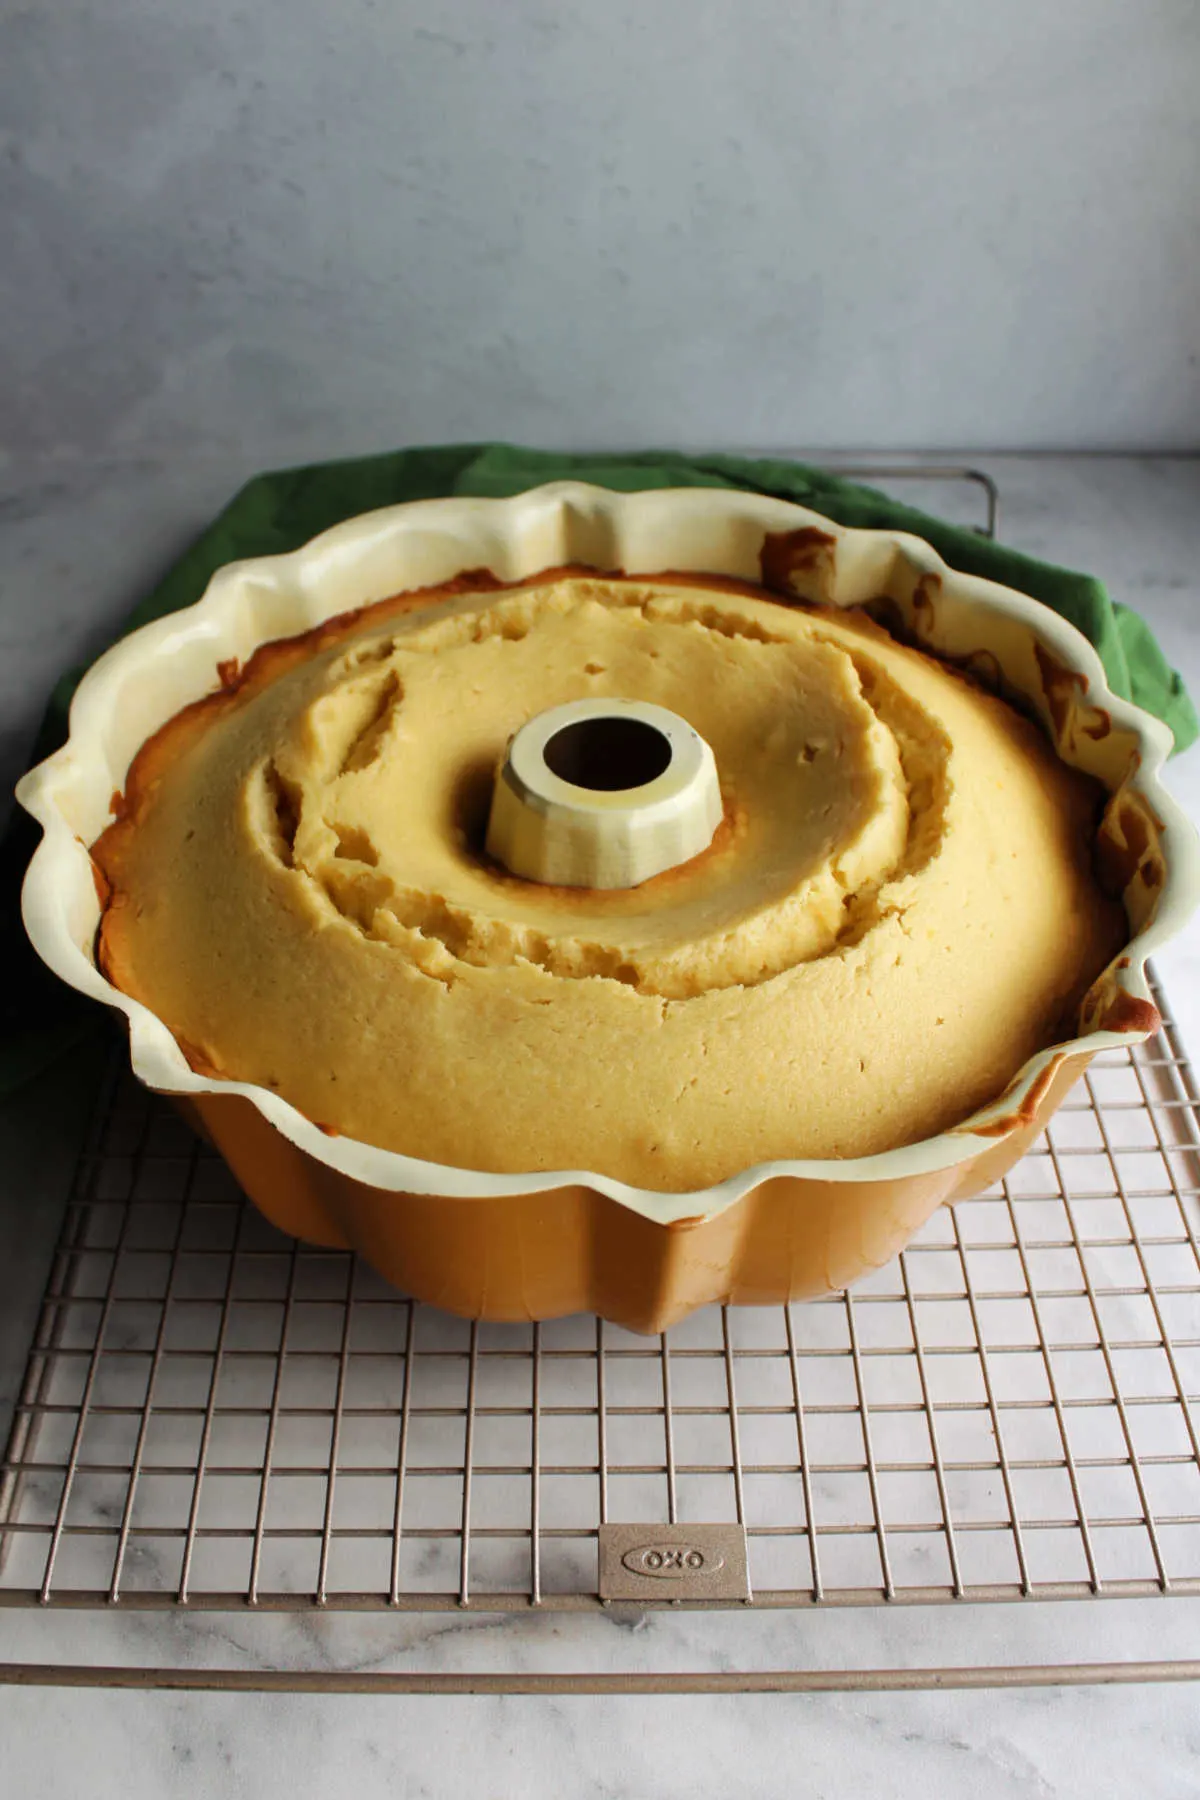 Honey lemon bundt cake fresh from the oven cooling in its pan. 